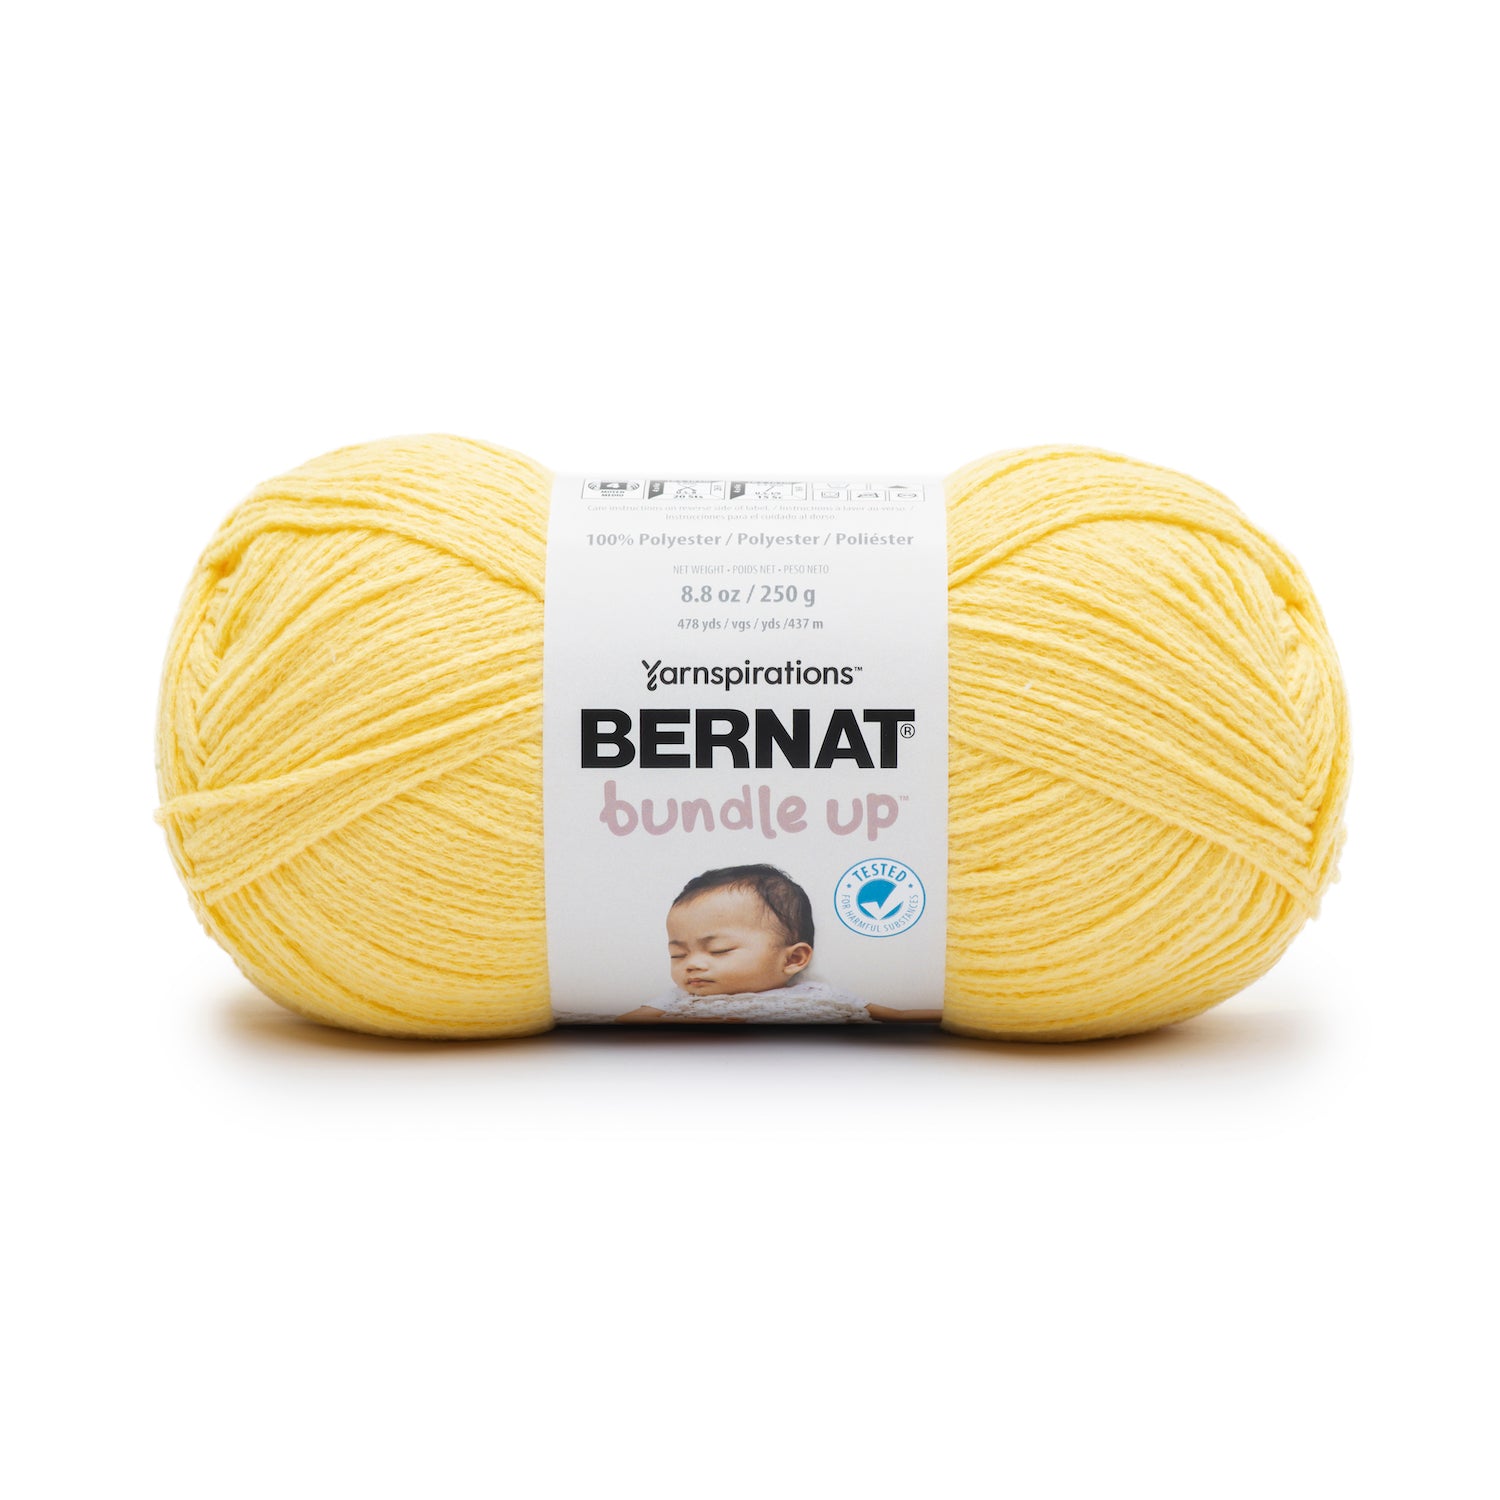 Bernat Bundle Up Yarn (250g/8.8oz) - Discontinued shades